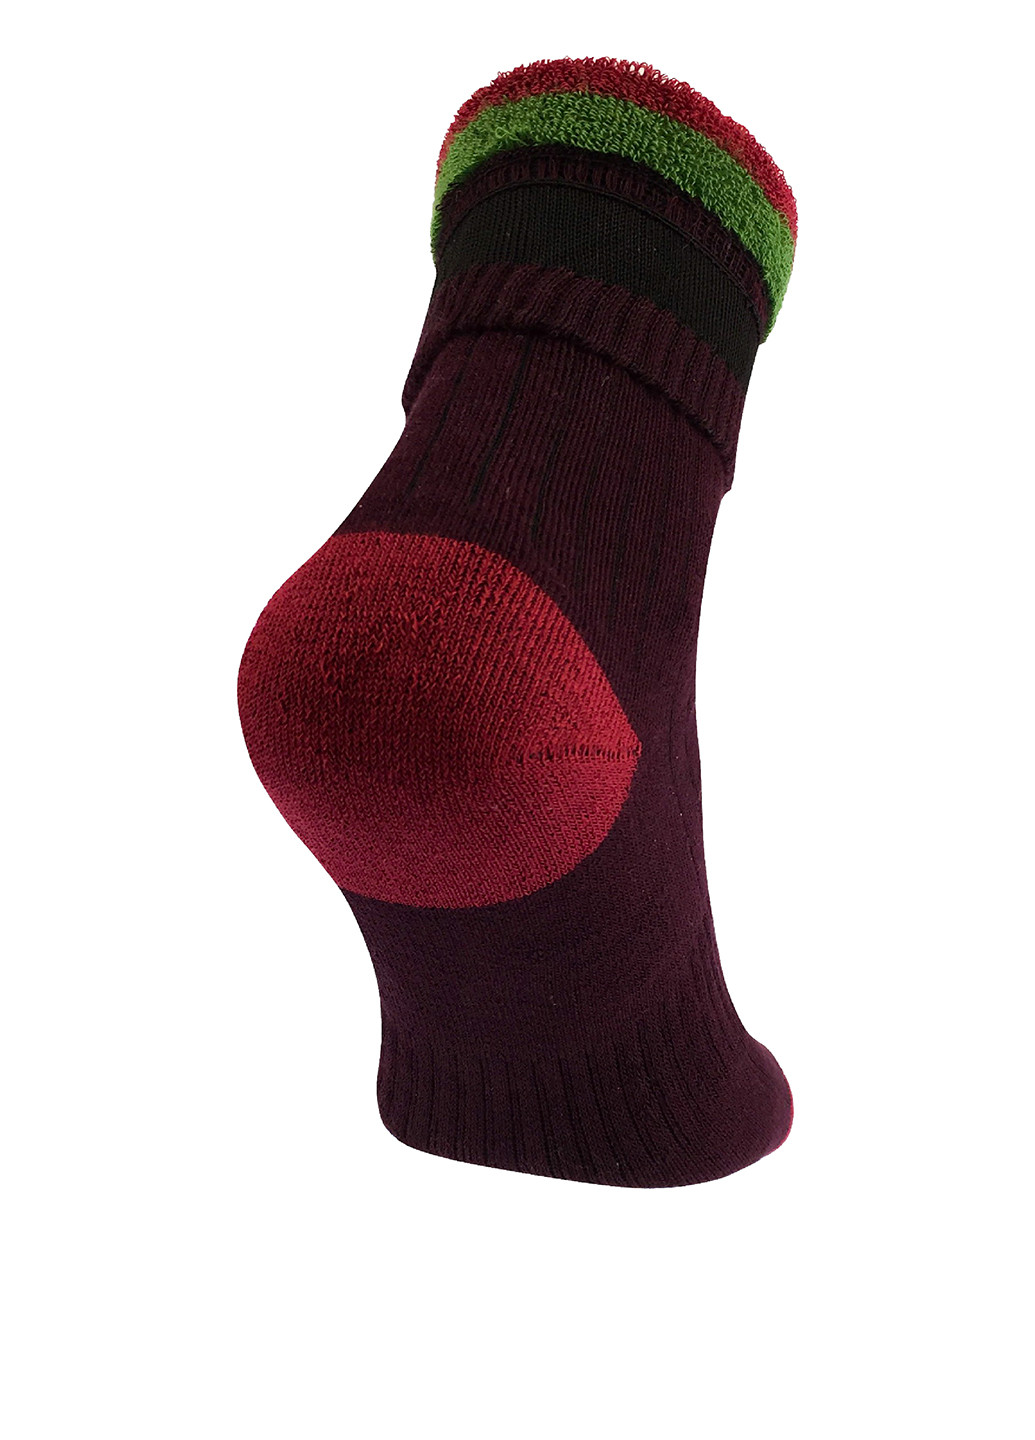 Носки Mo-Ko-Ko Socks (27609021)